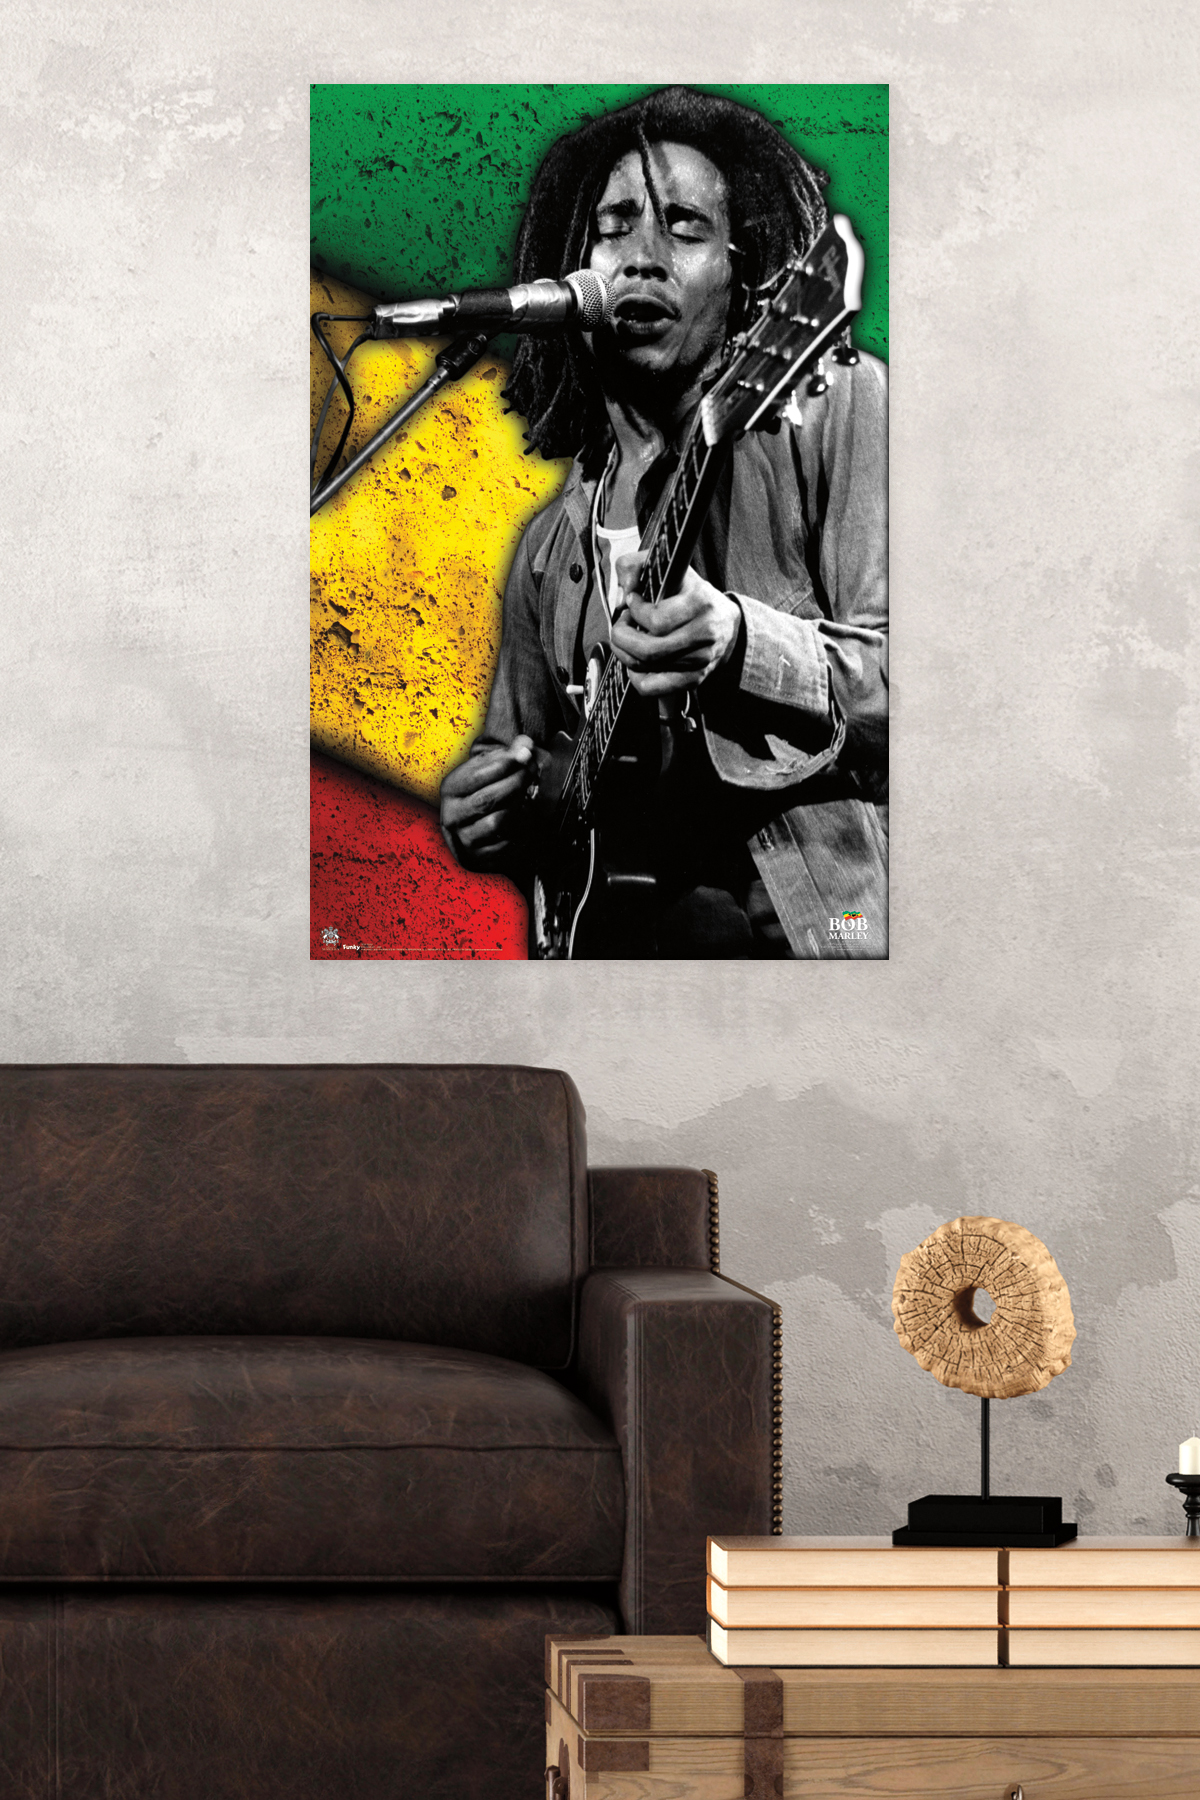 Bob Marley - Jam - image 2 of 2